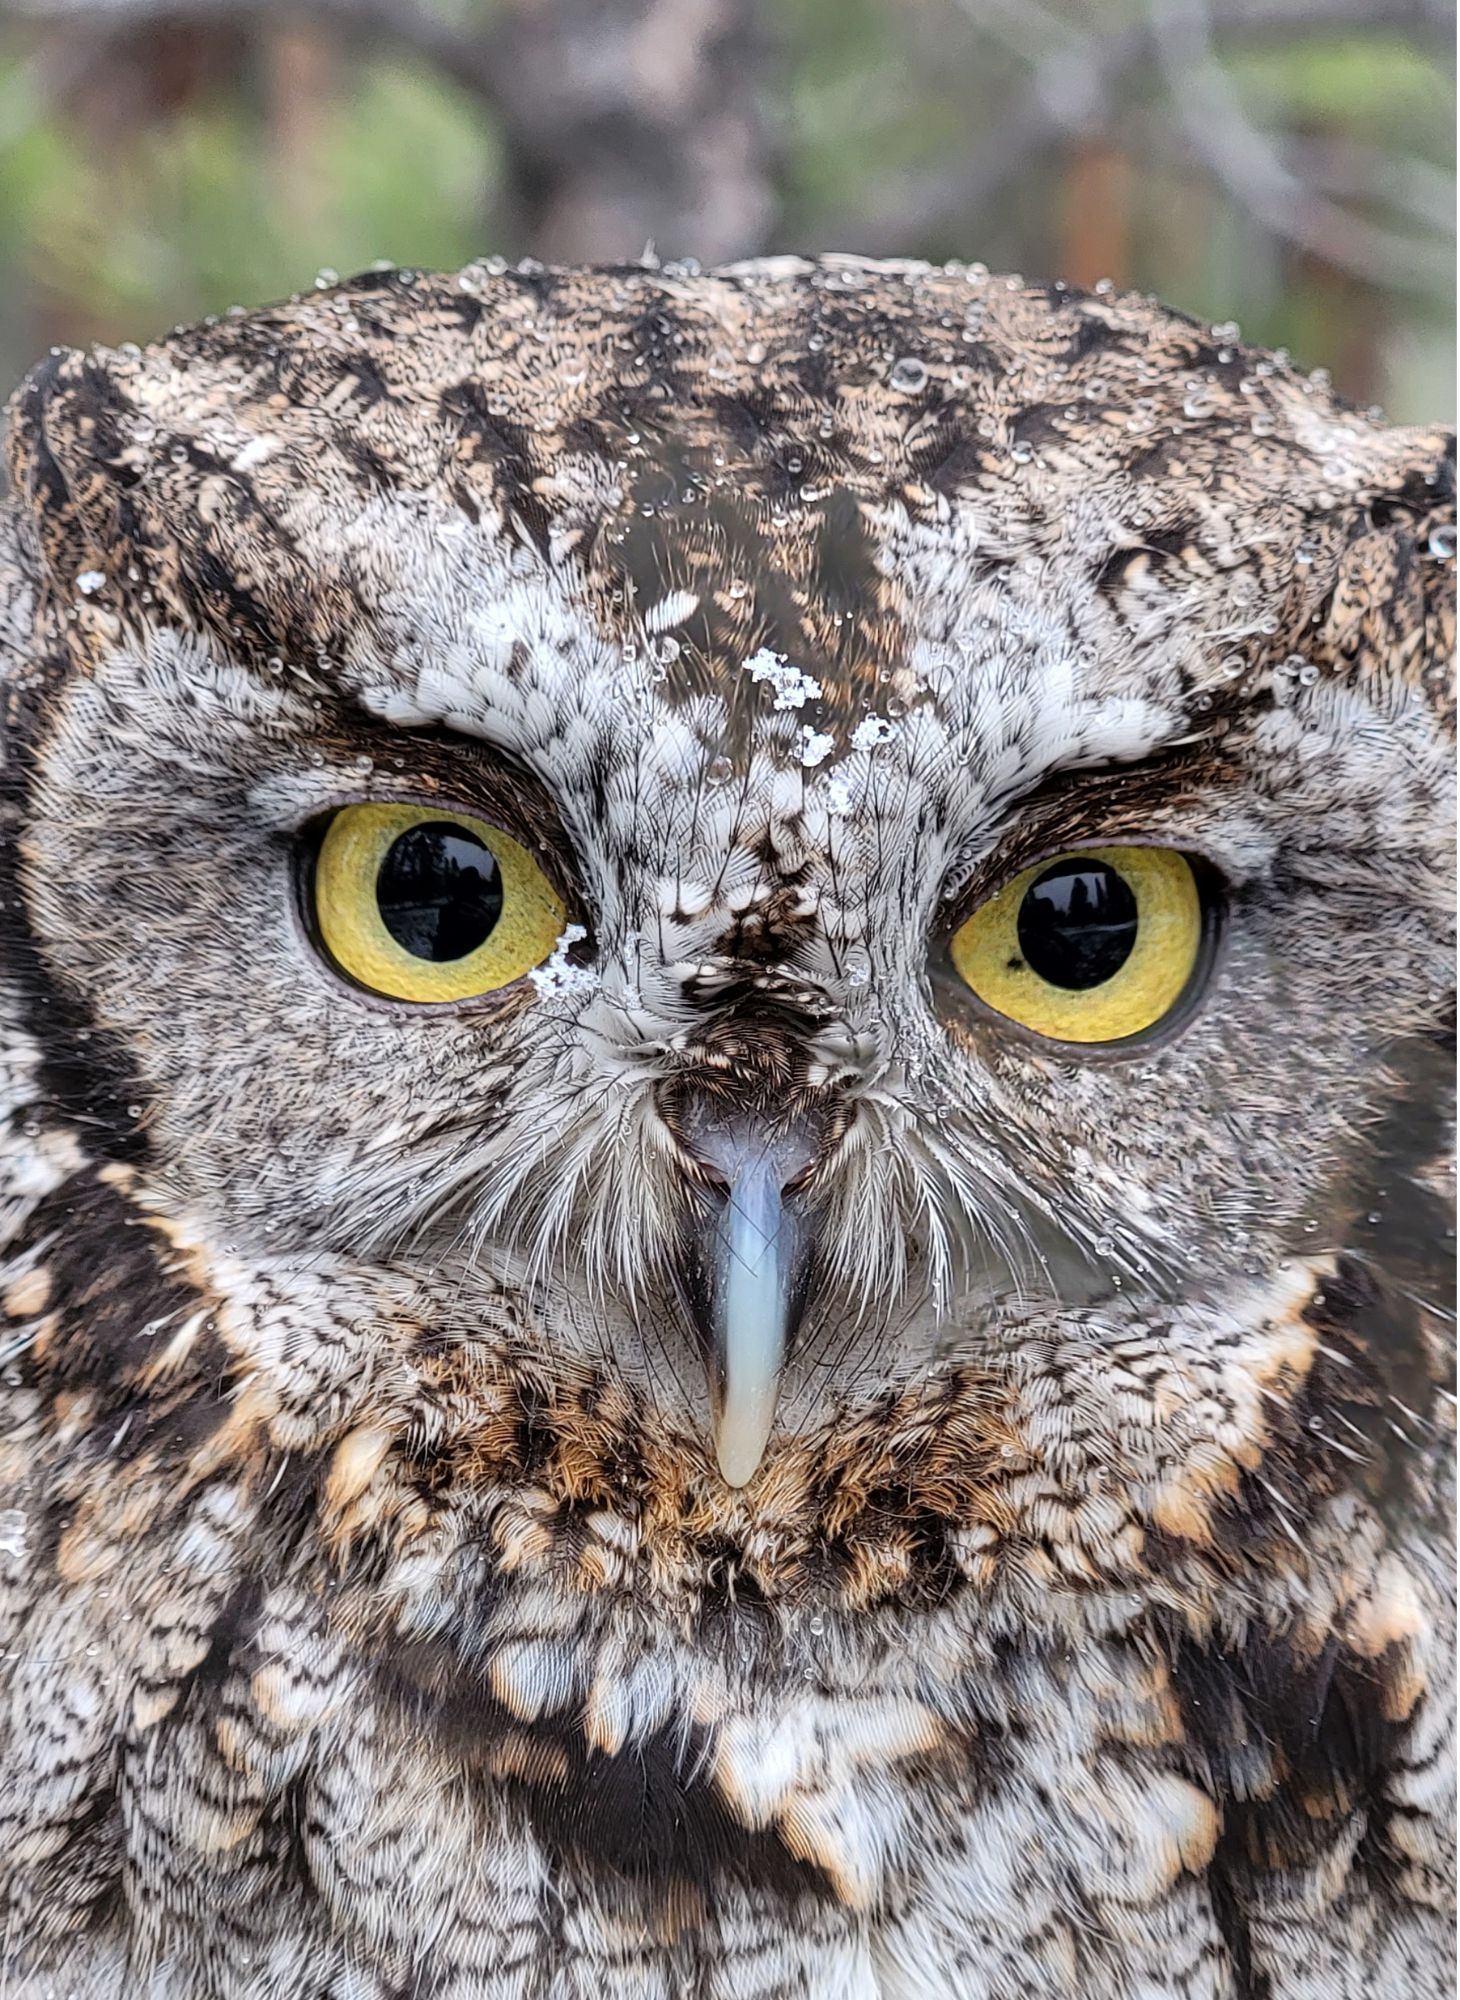 Western Screech-owl, Minerva photo by Jesse Varnado